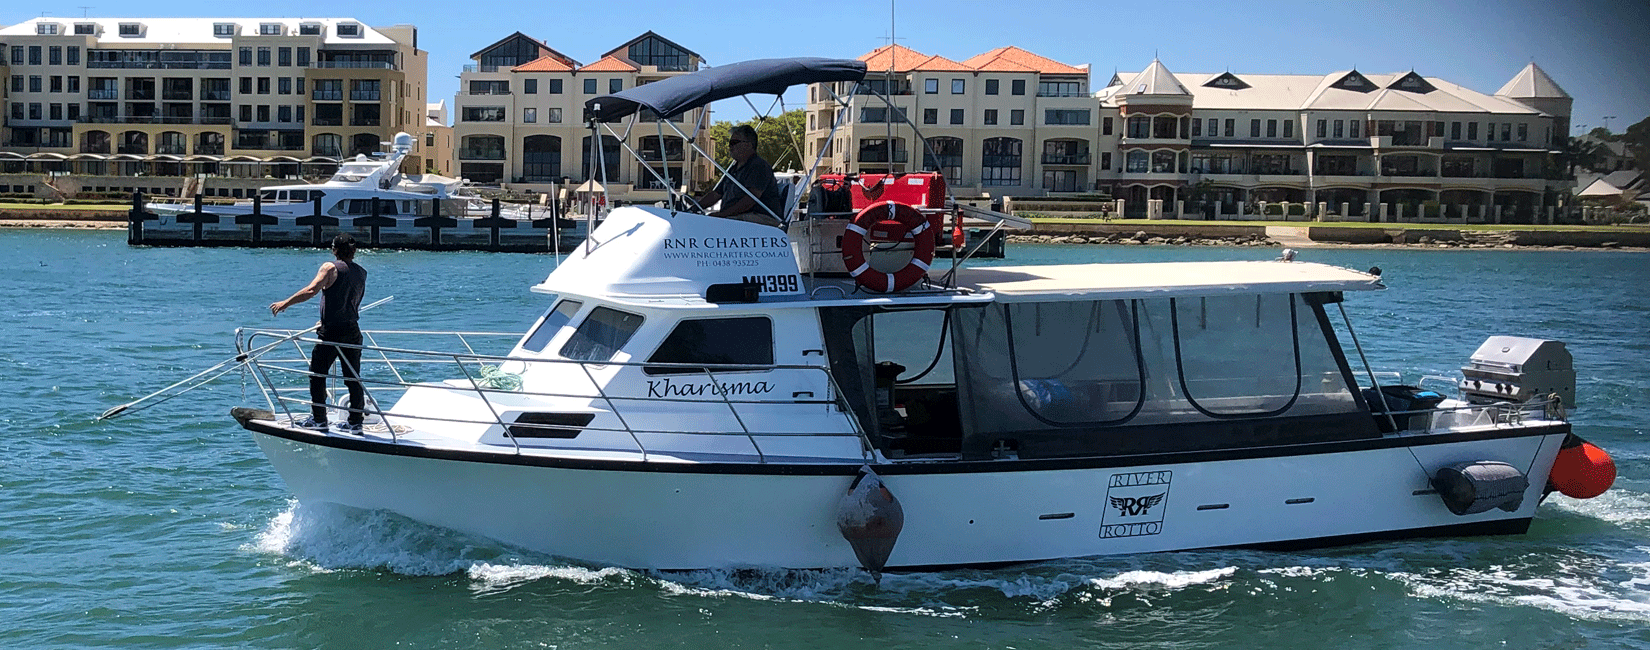 KHARISMA side profile boat charters Perth Swan Riever copy